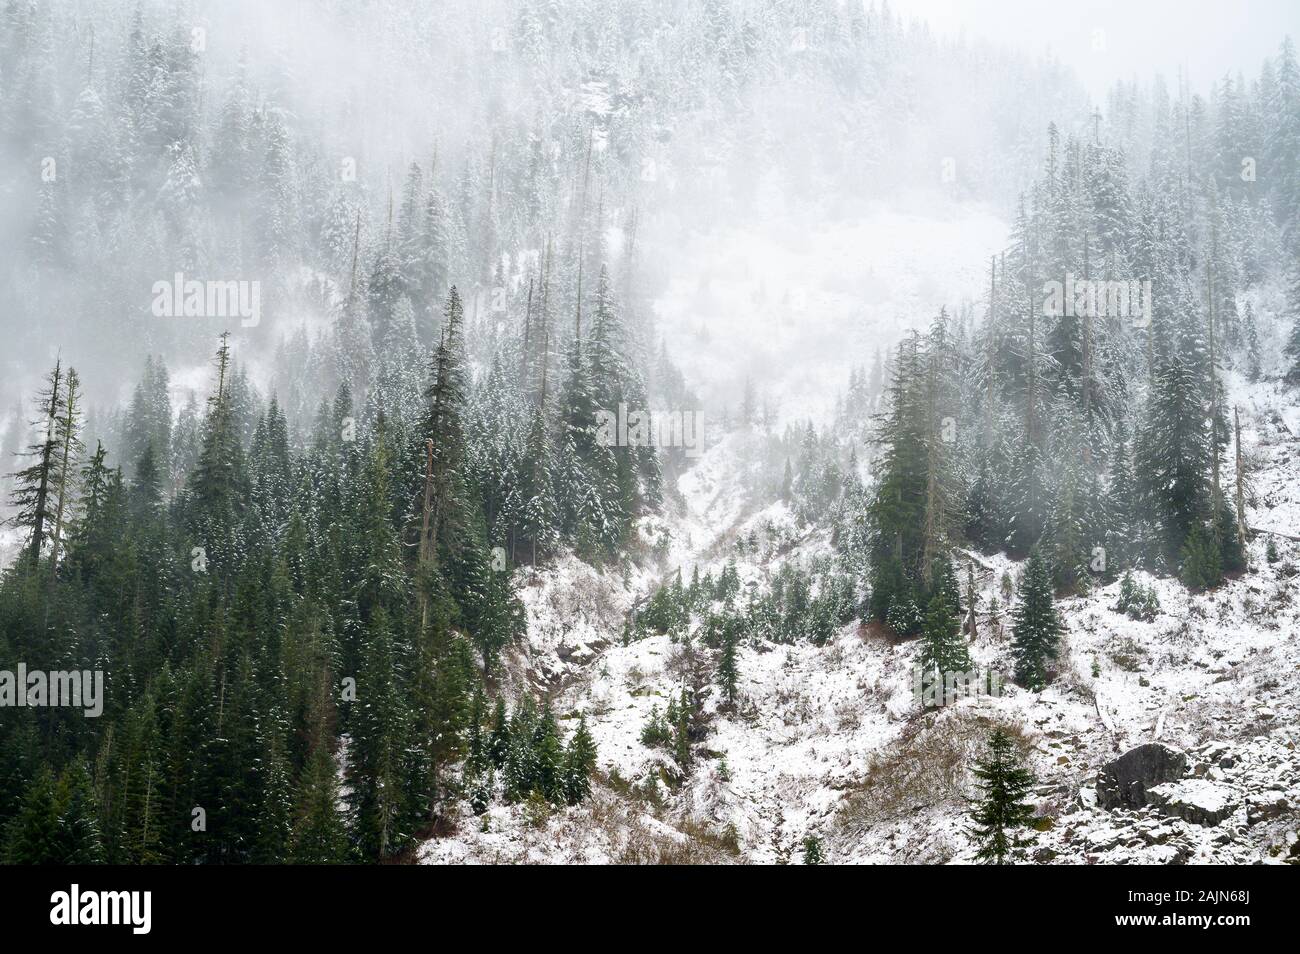 Foggy Mountain Trees With Snow Falling Stock Photo